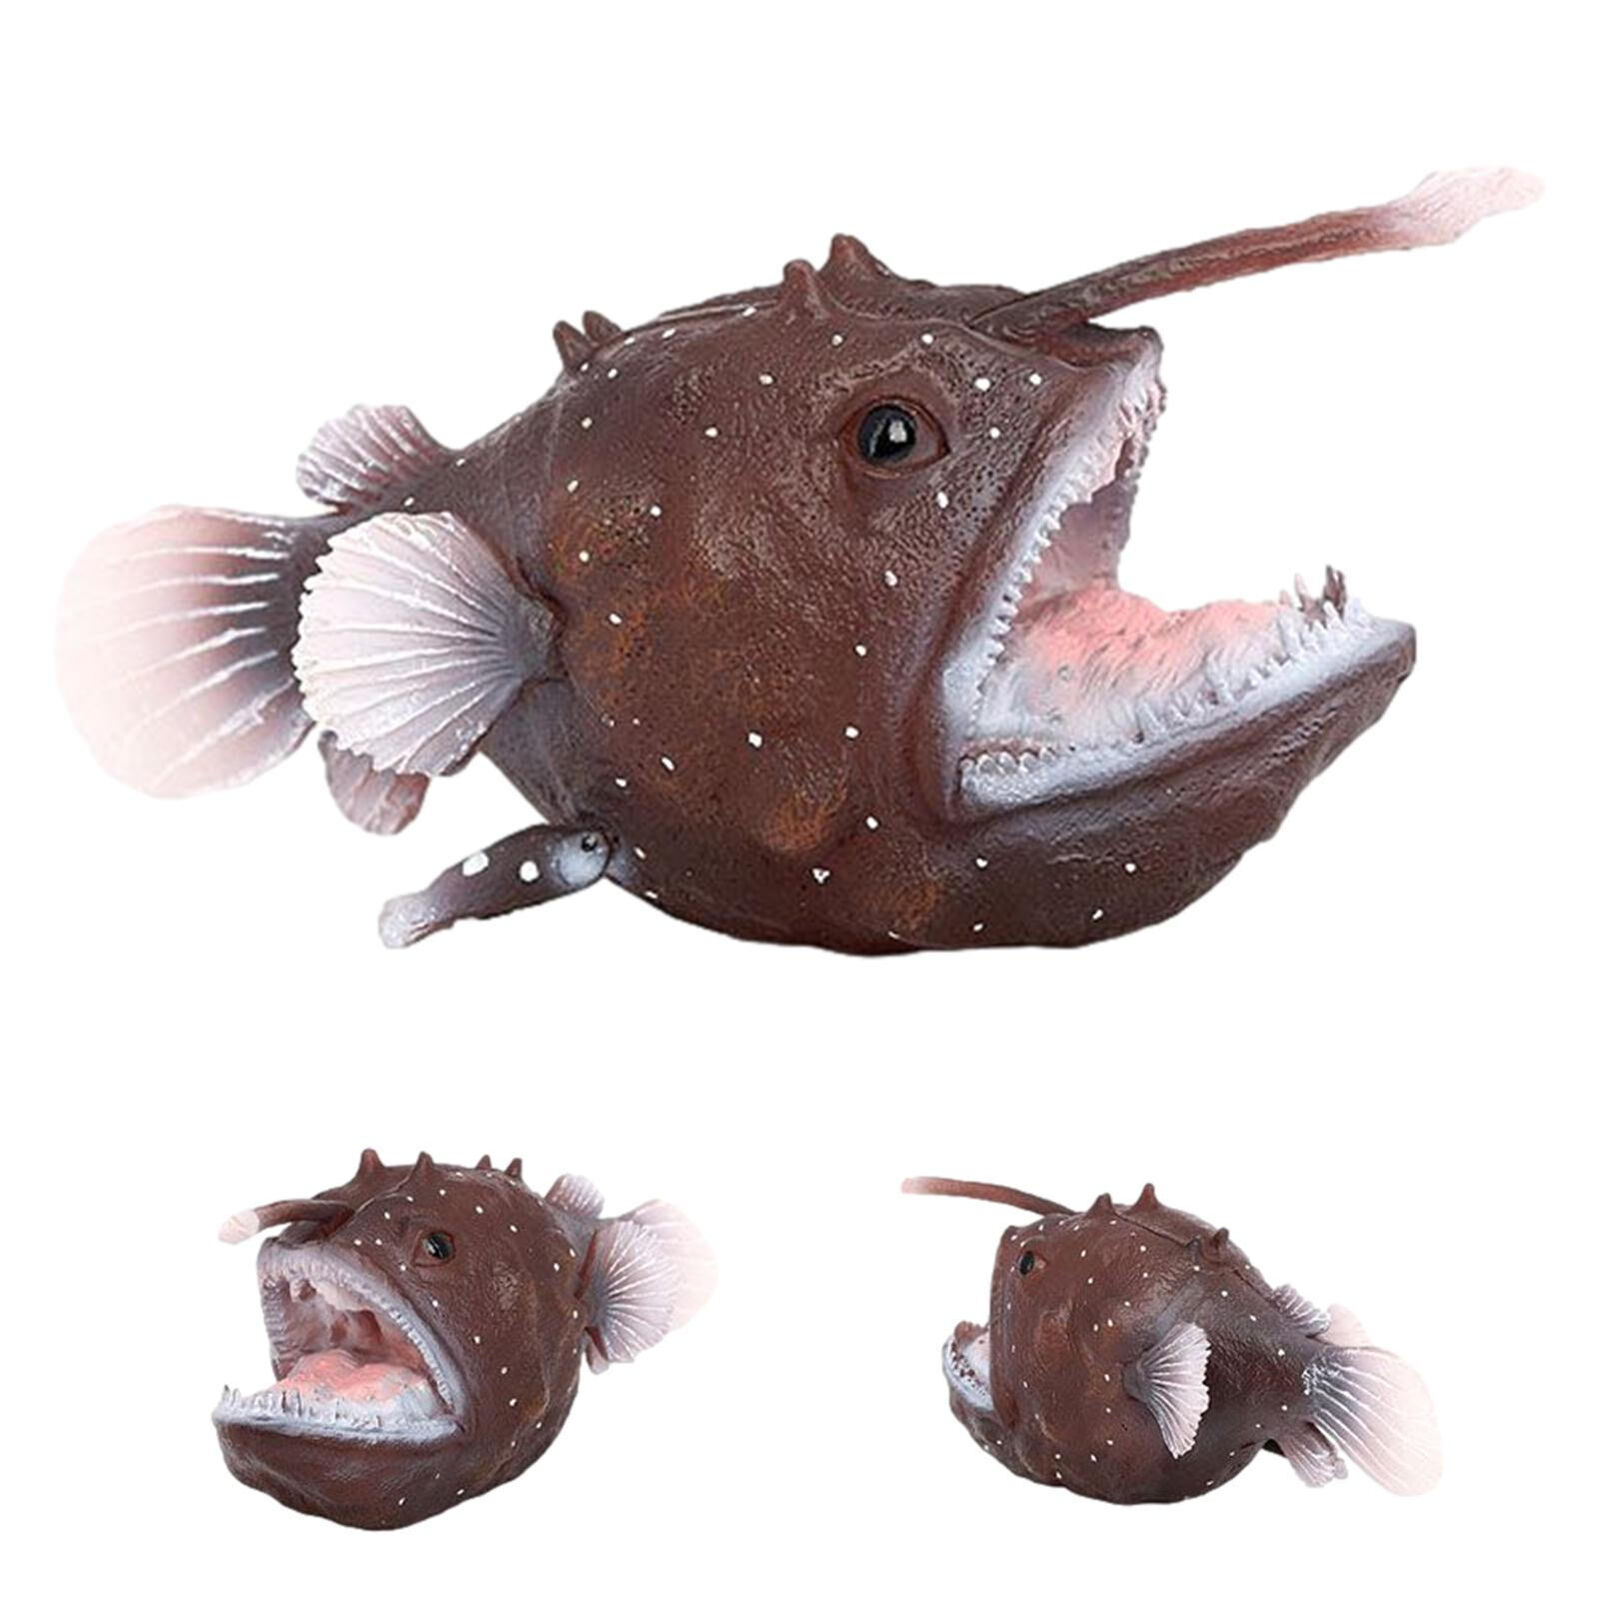 Simulation Mini Angler Fish Figure Ocean Animal Model Kids Education Toy 5.3\